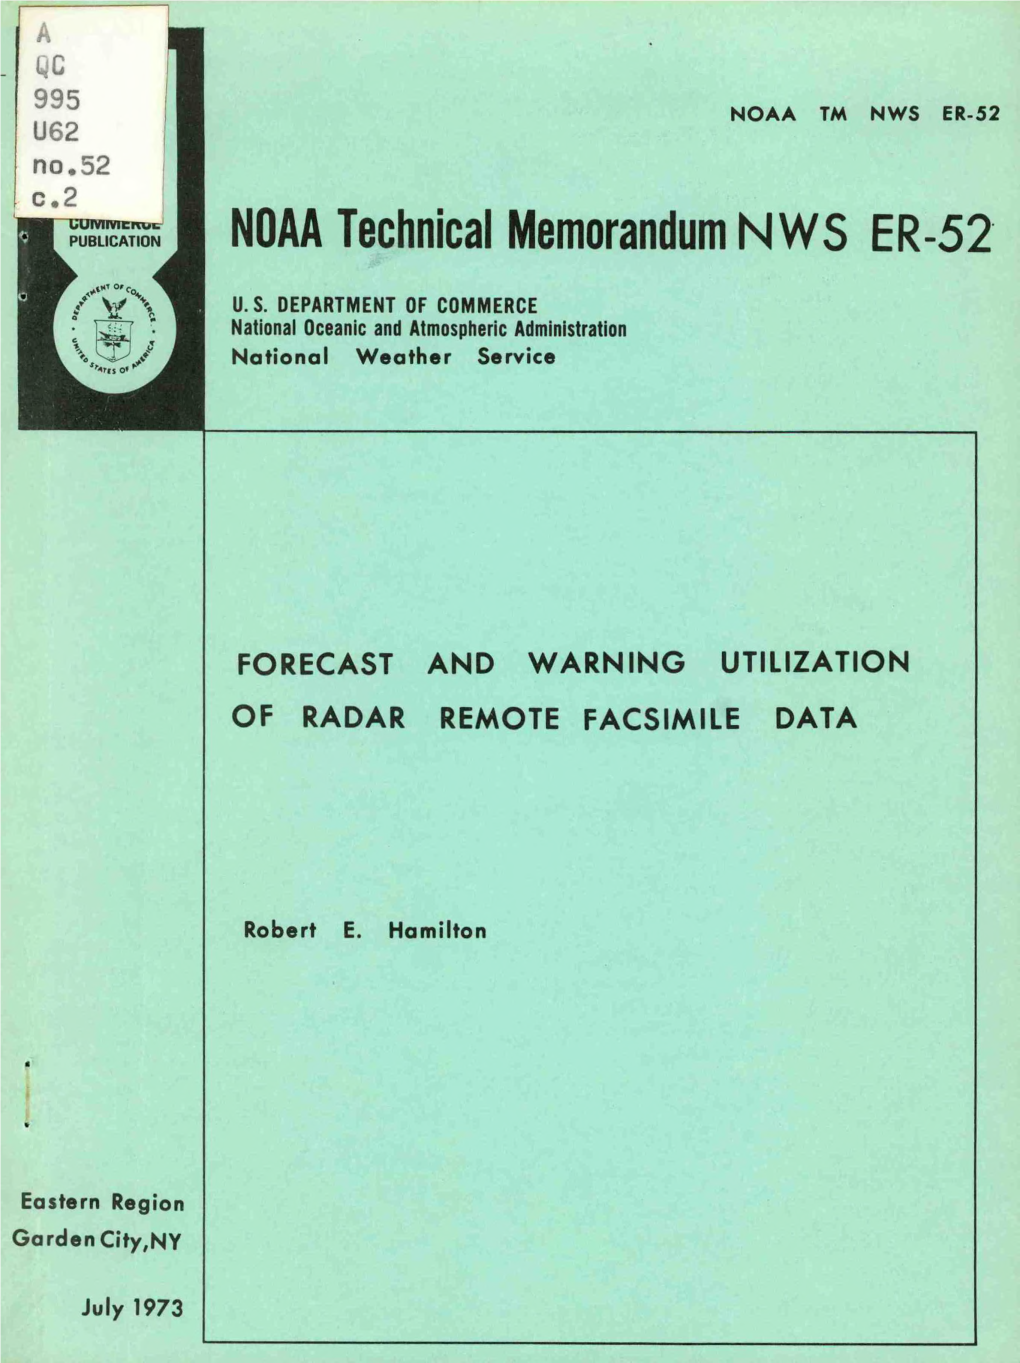 Forecast and Warning Utilization of Radar Remote Facsimile Data